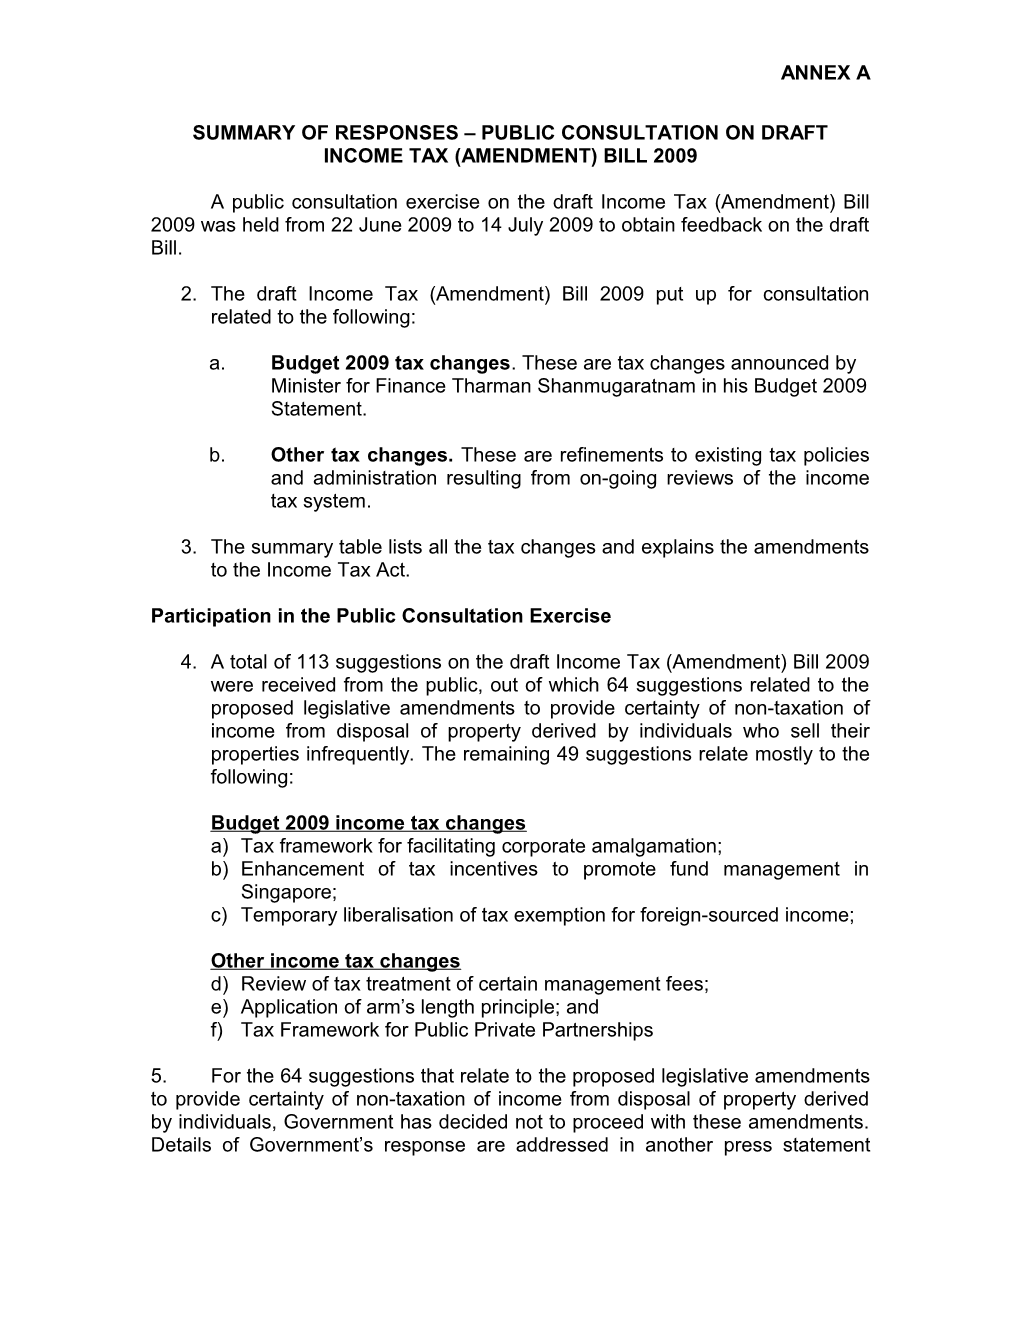 Summary of Responses Public Consultation on Draft Income Tax (Amendment) Bill 2009